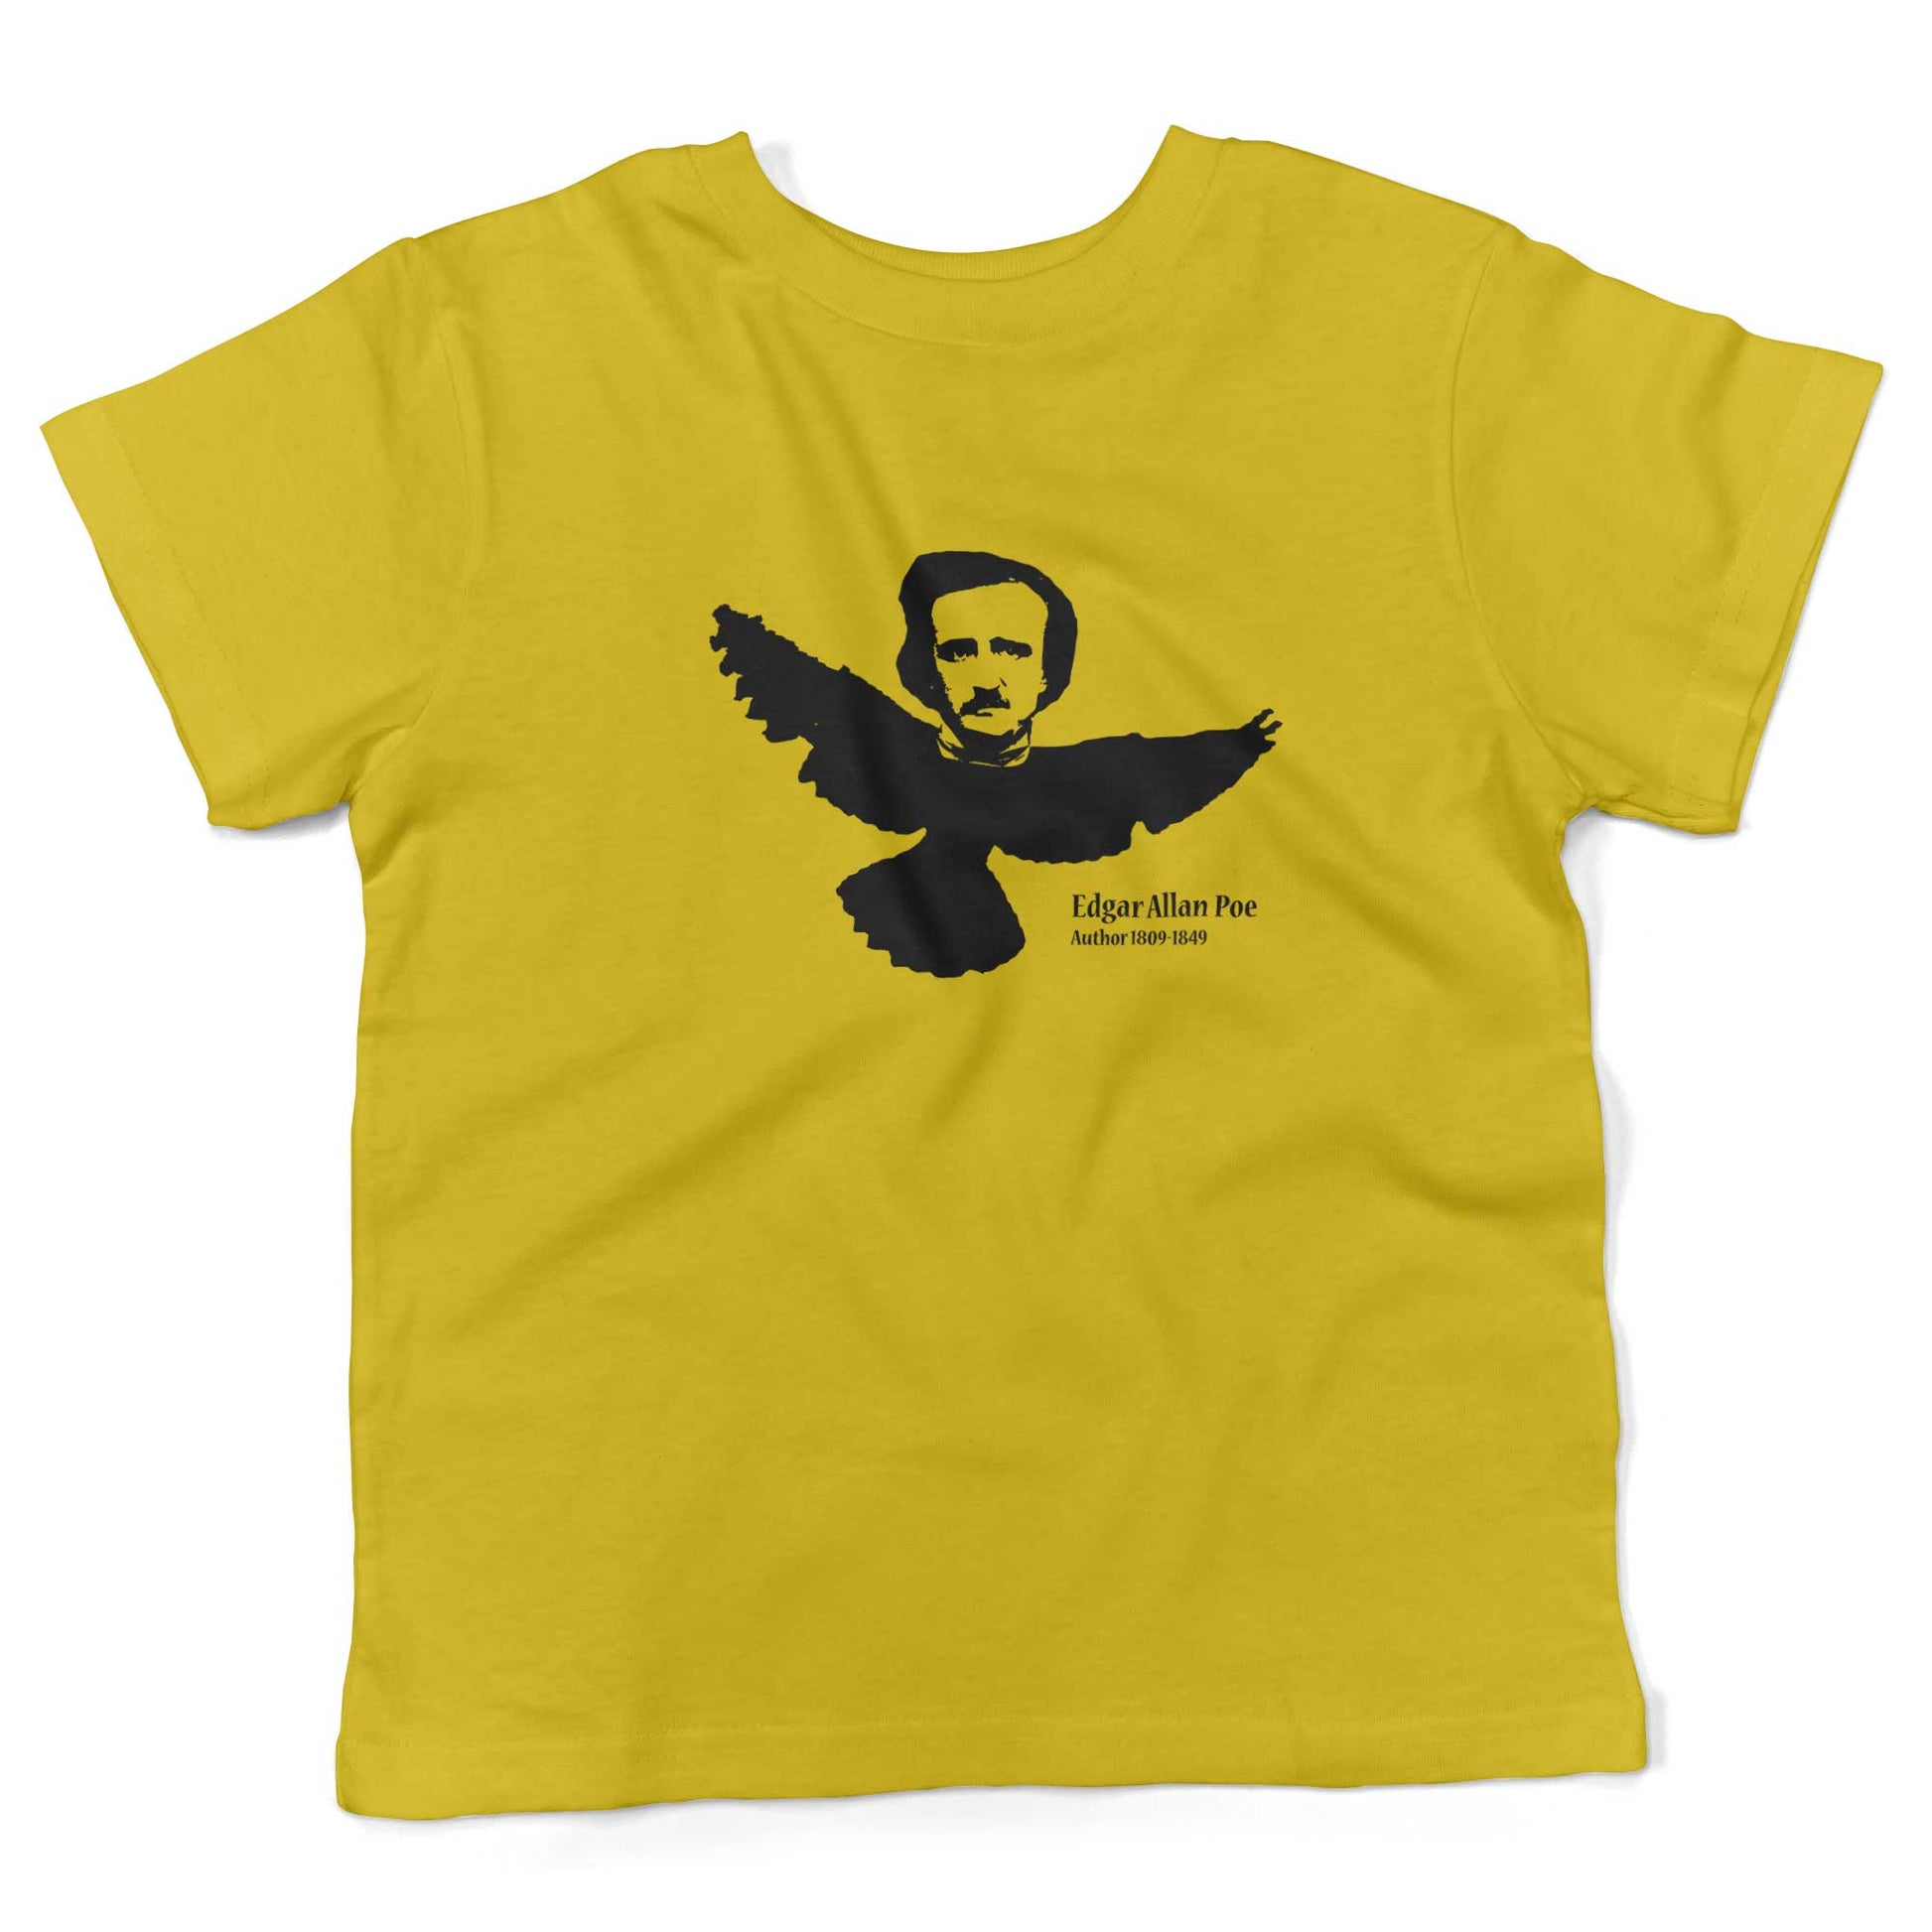 Edgar Allan Poe Toddler Shirt-Sunshine Yellow-2T